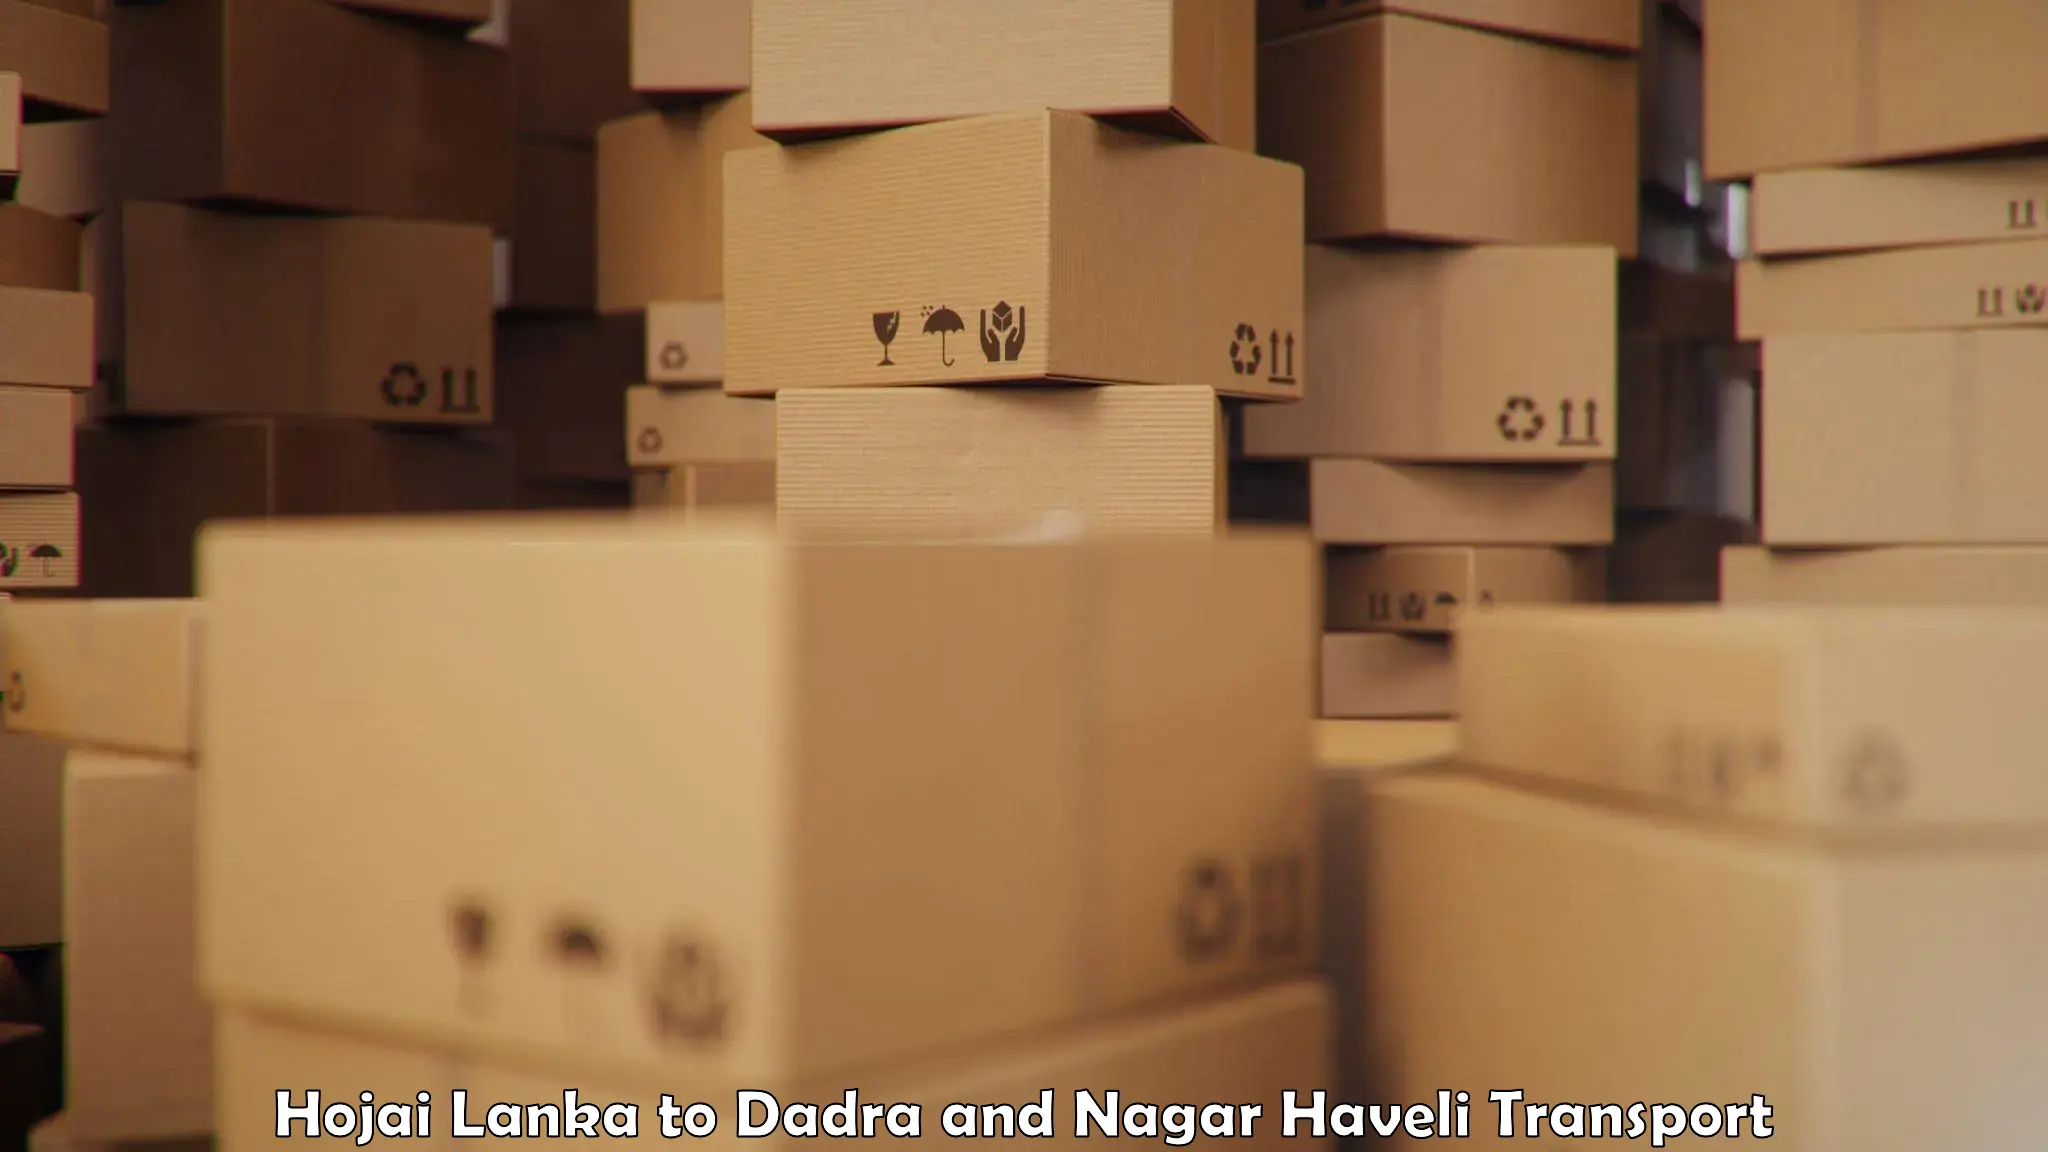 Container transport service Hojai Lanka to Dadra and Nagar Haveli